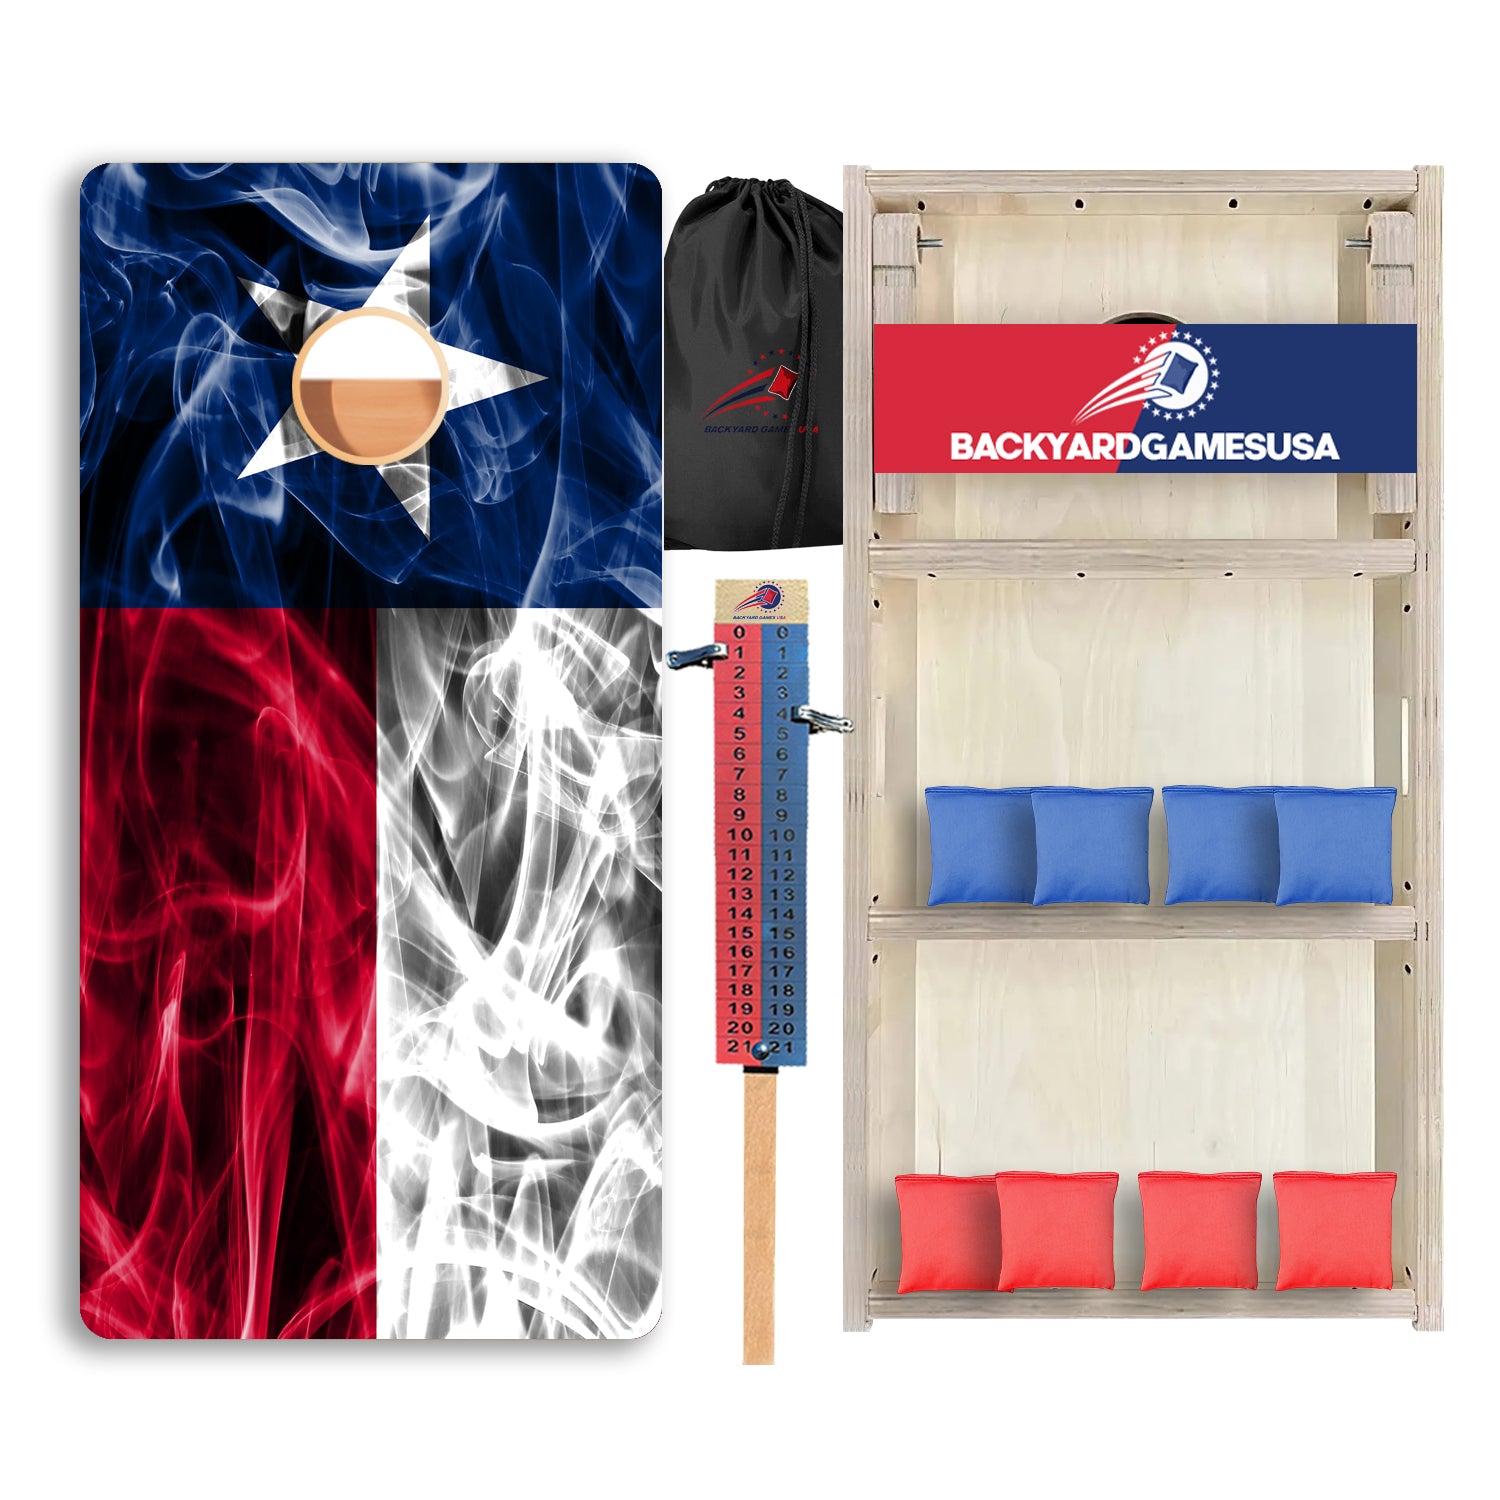 Texas Windy Flag Professional Cornhole Boards